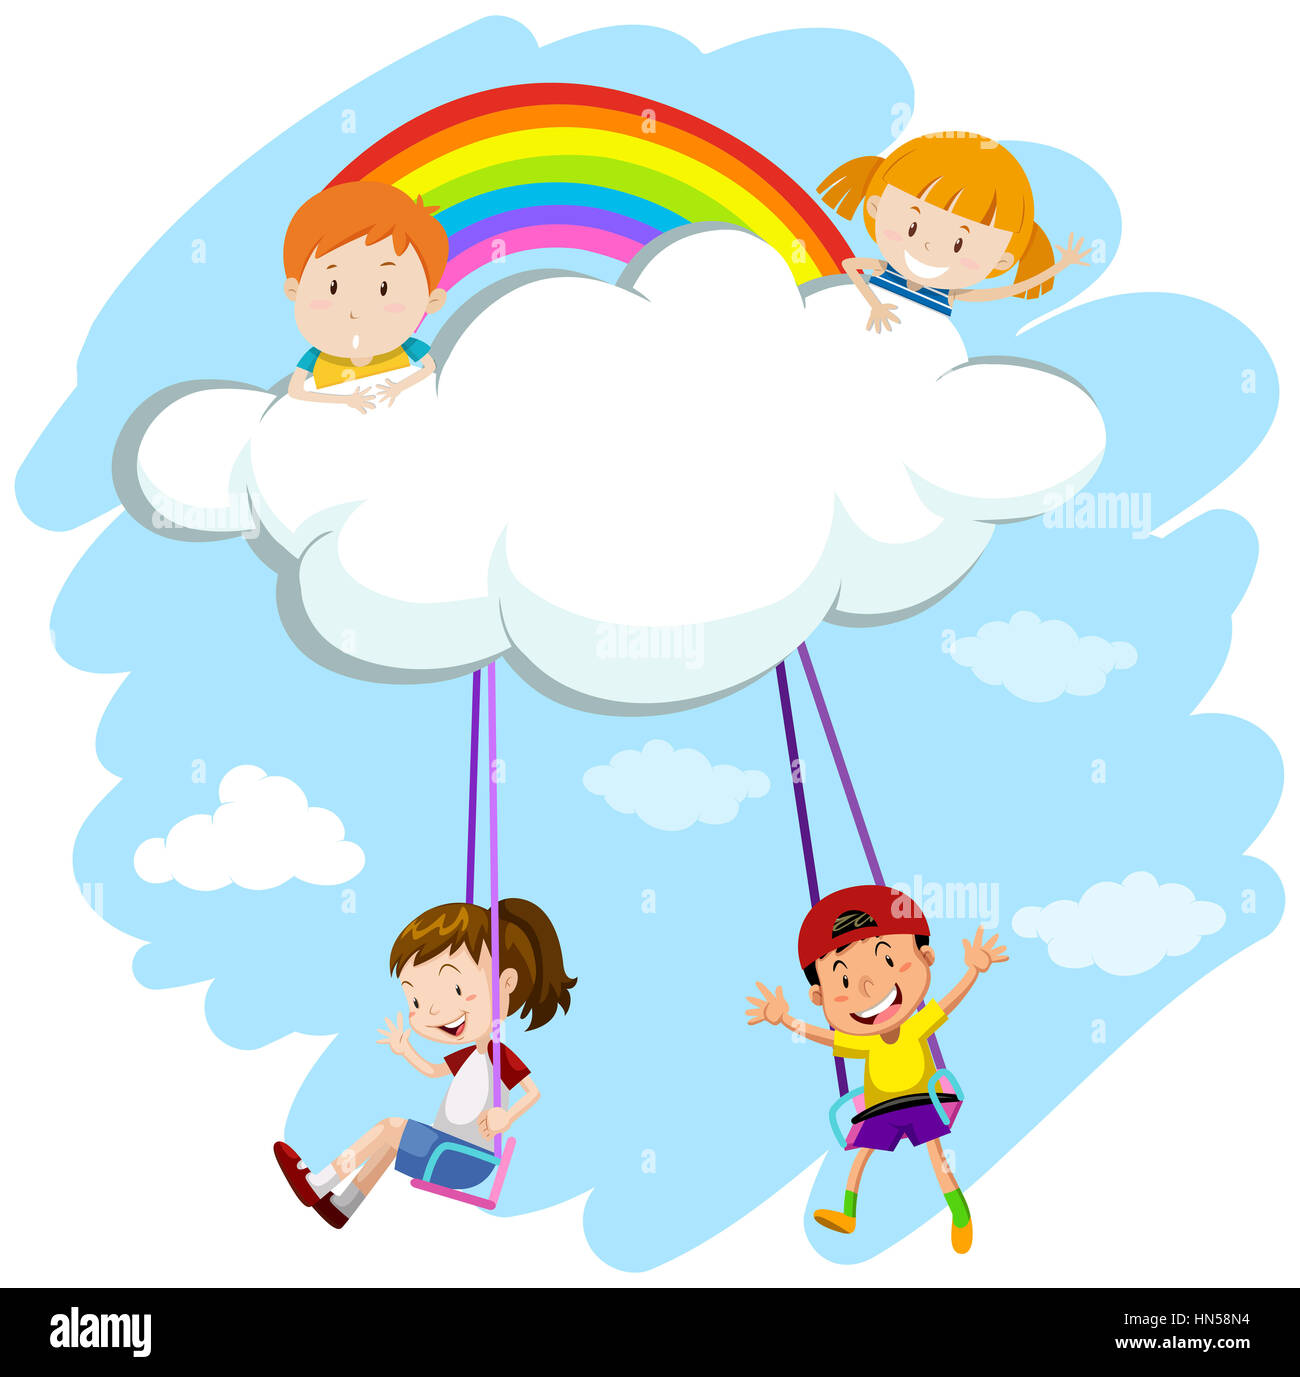 Kids playing swing on clouds illustration Stock Photo - Alamy